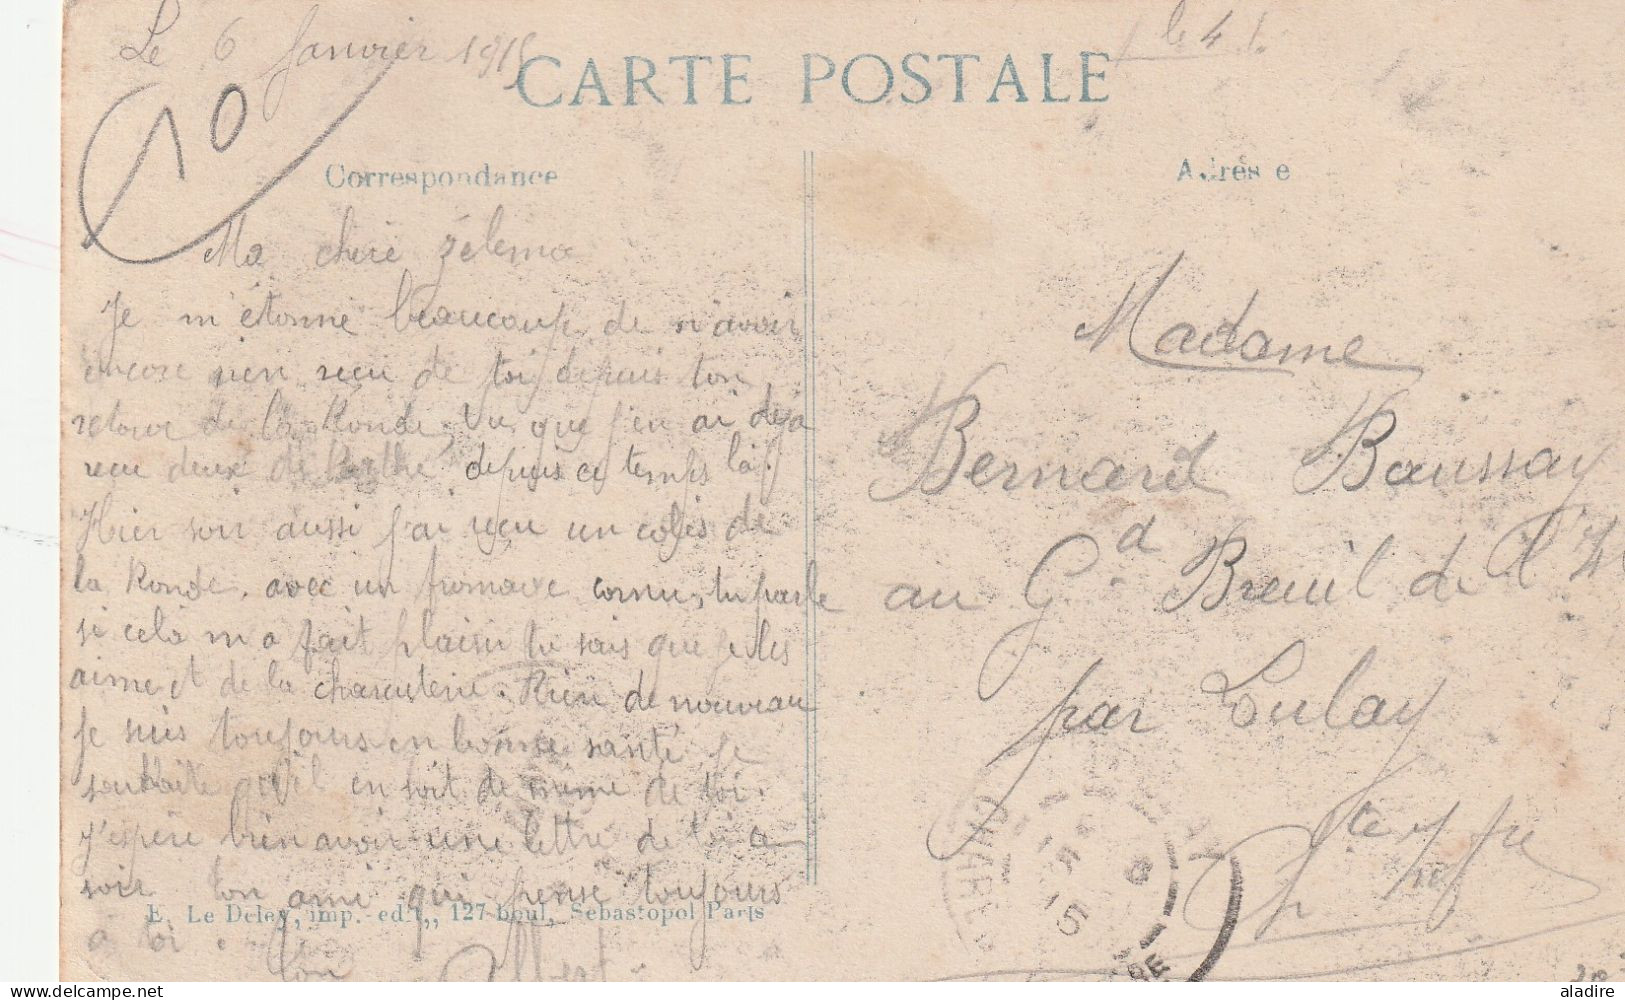 1914/1918 - Collection de 9 enveloppes et cartes - SAINTE ADRESSE - gouvernement belge en exil - Poste belge - Belgisch